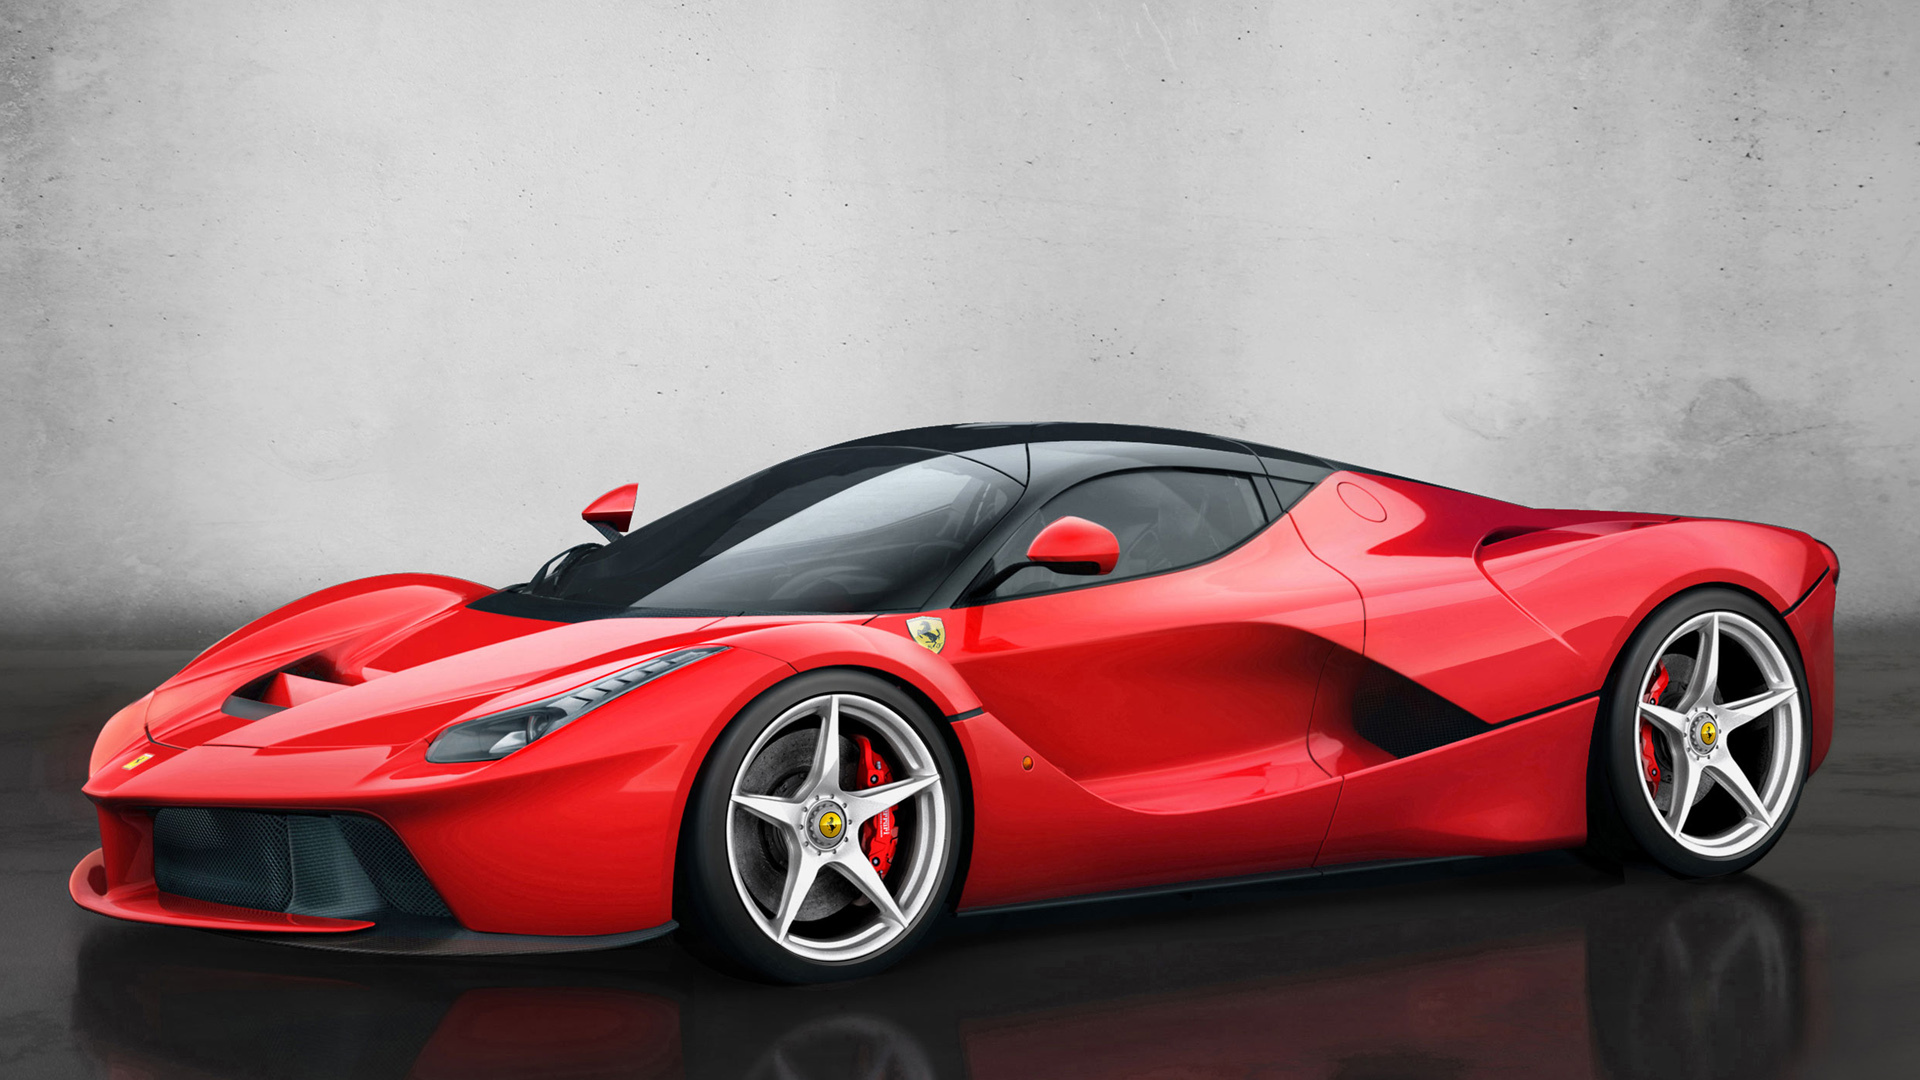 2014 Ferrari Laferrari Wallpaper HD Car Wallpapers ID 